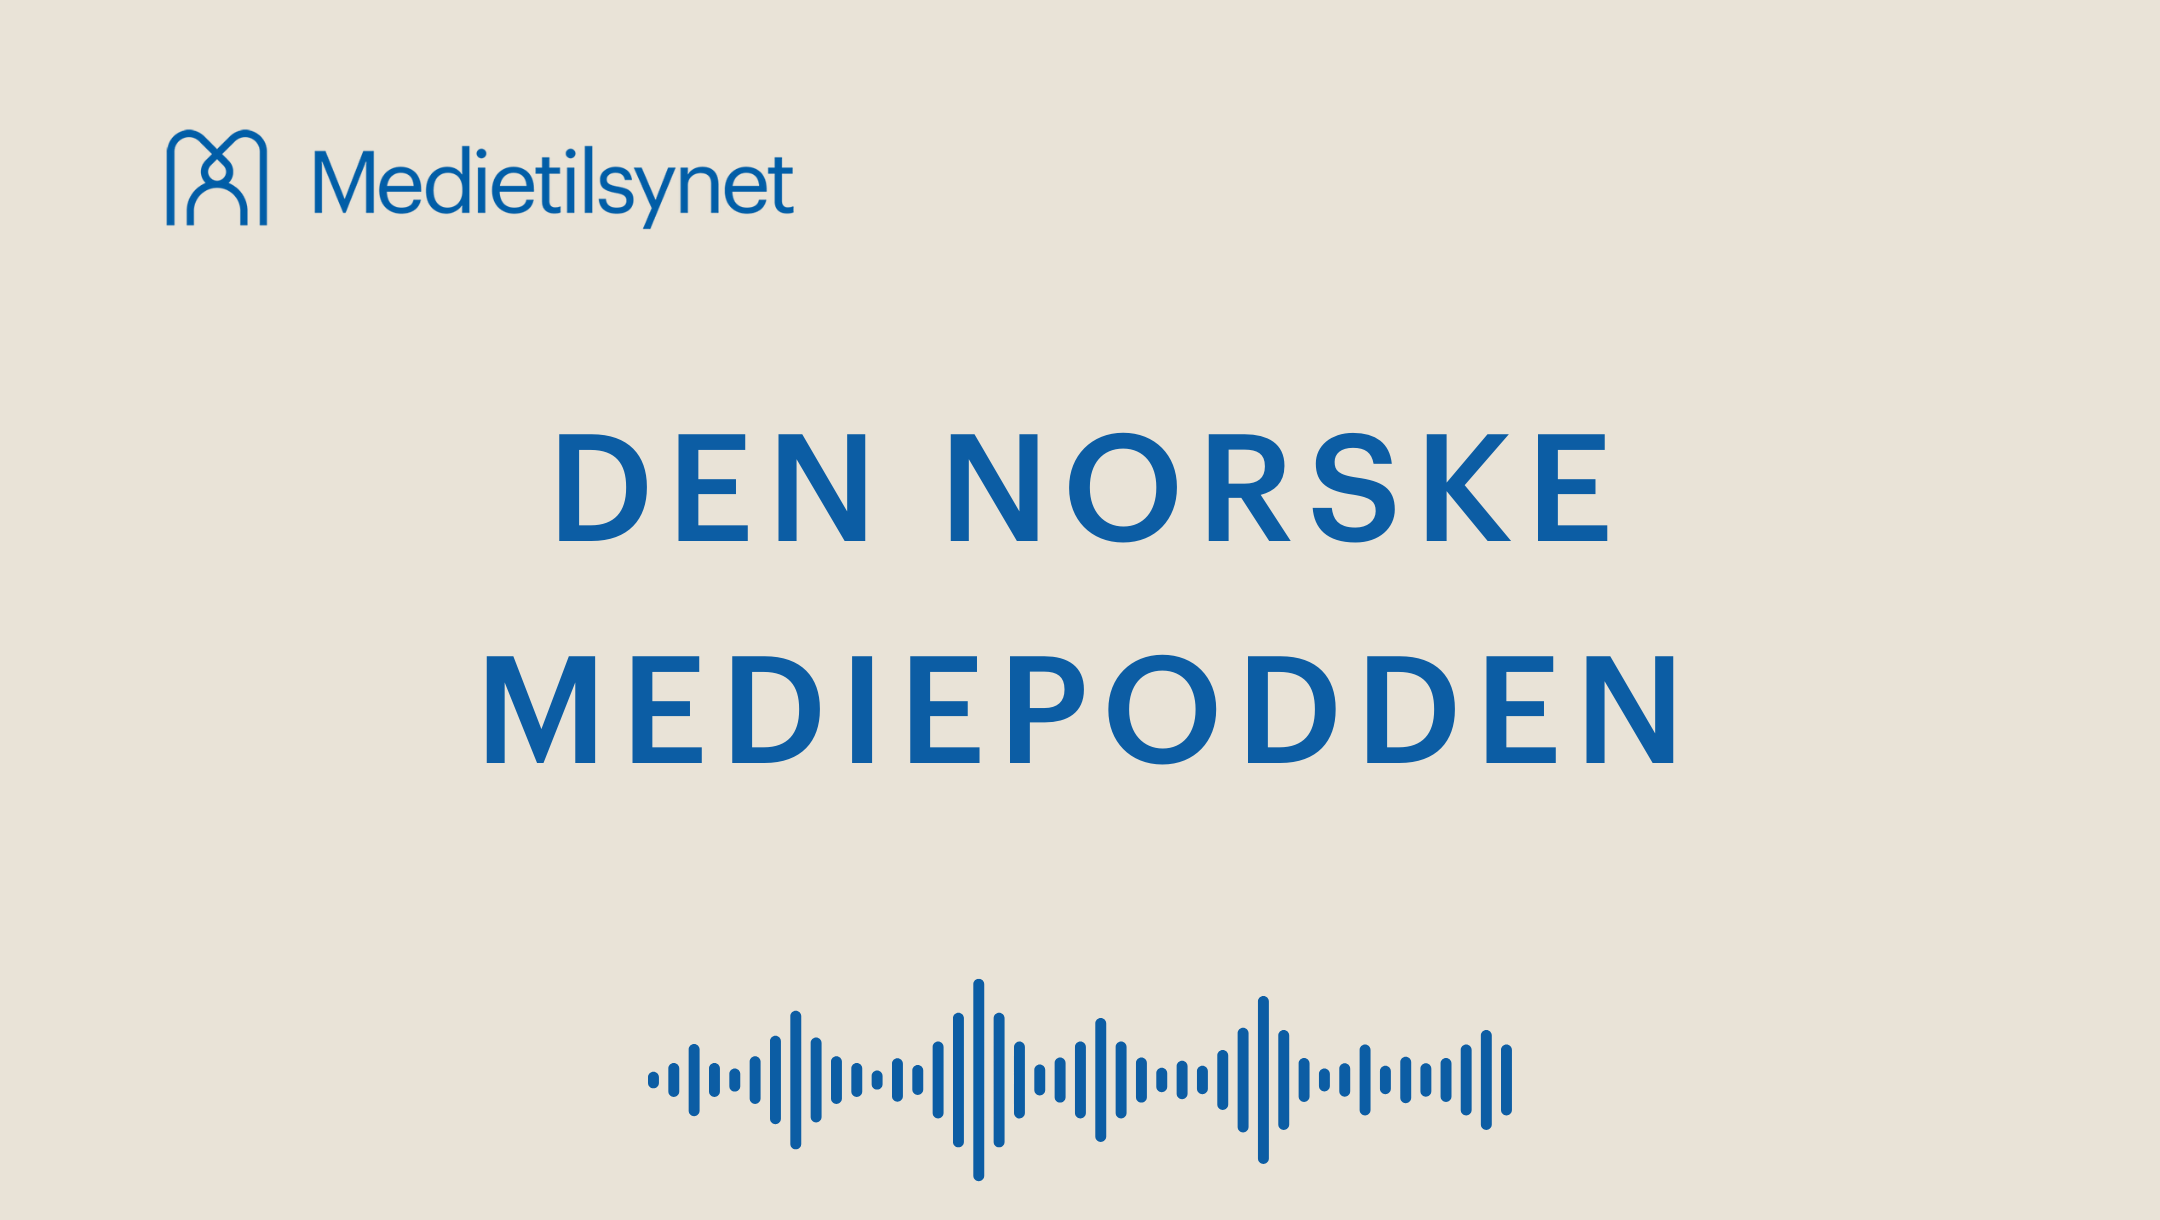 Tekstplakat med teksten "DEN NORSKE MEDIEPODDEN"